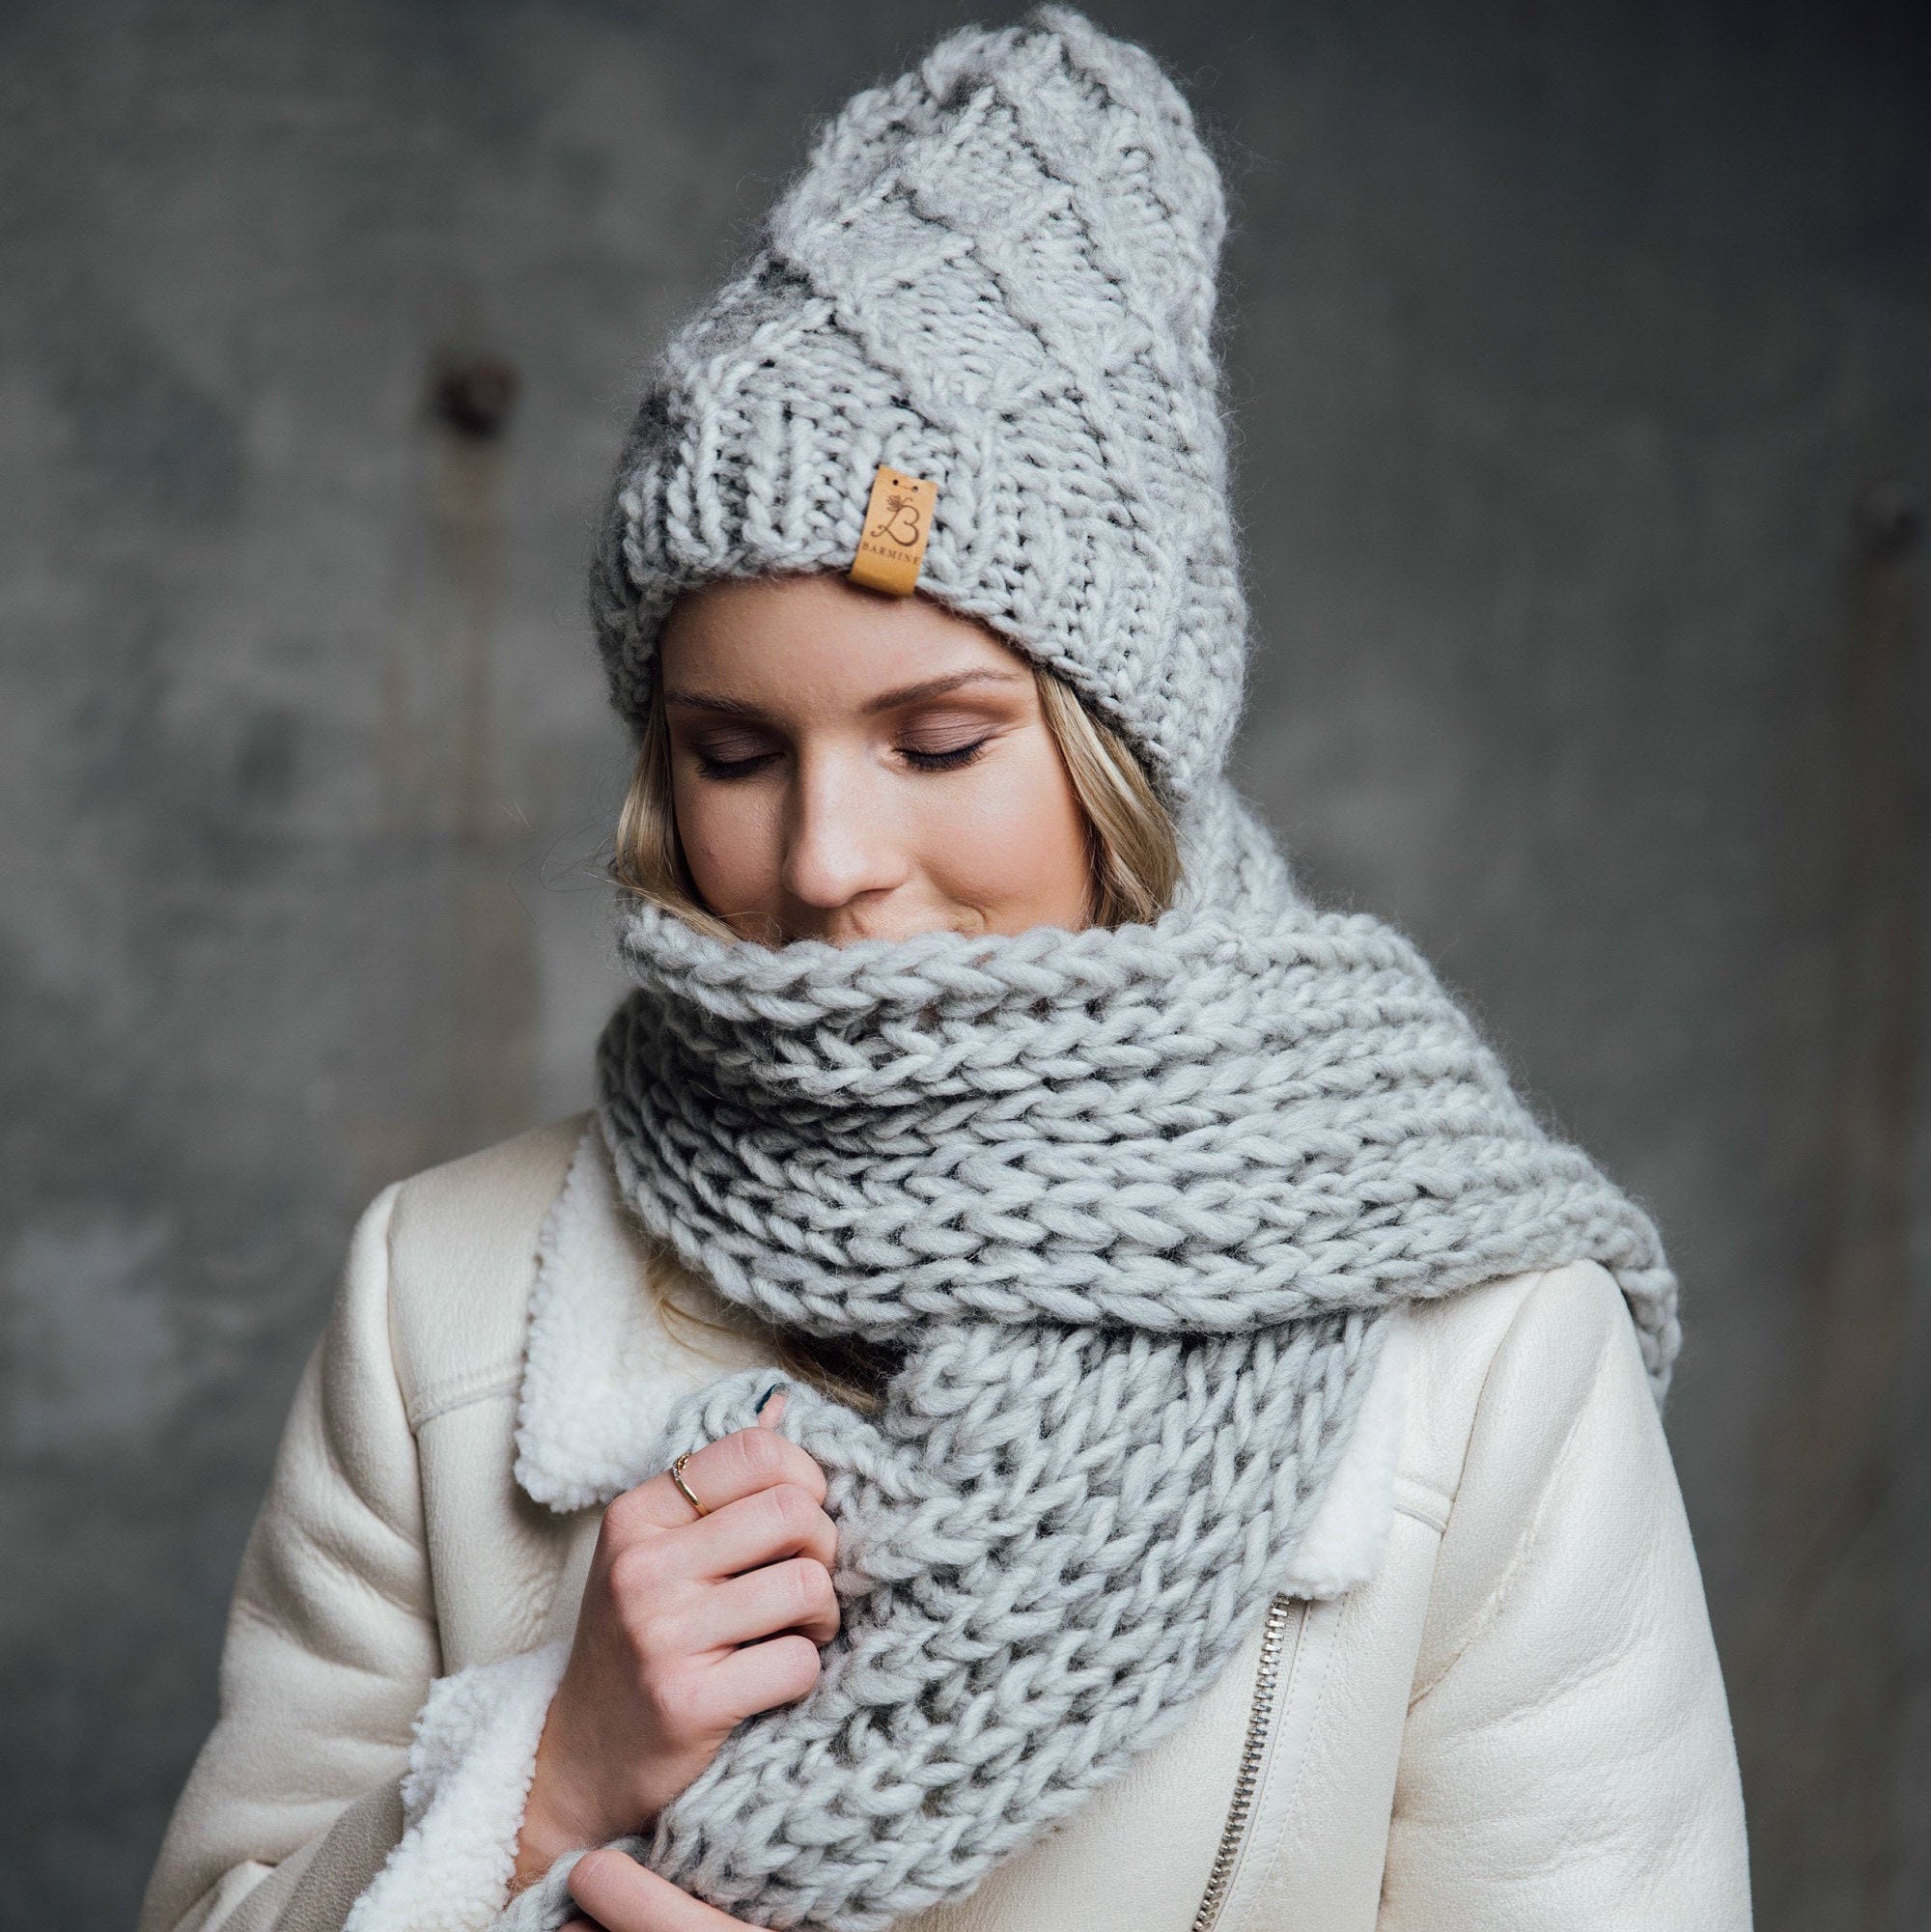 Winter wool scarf Handmade scarf Winter accessories Knit scarves women Knit scarf women.Infinity scarf